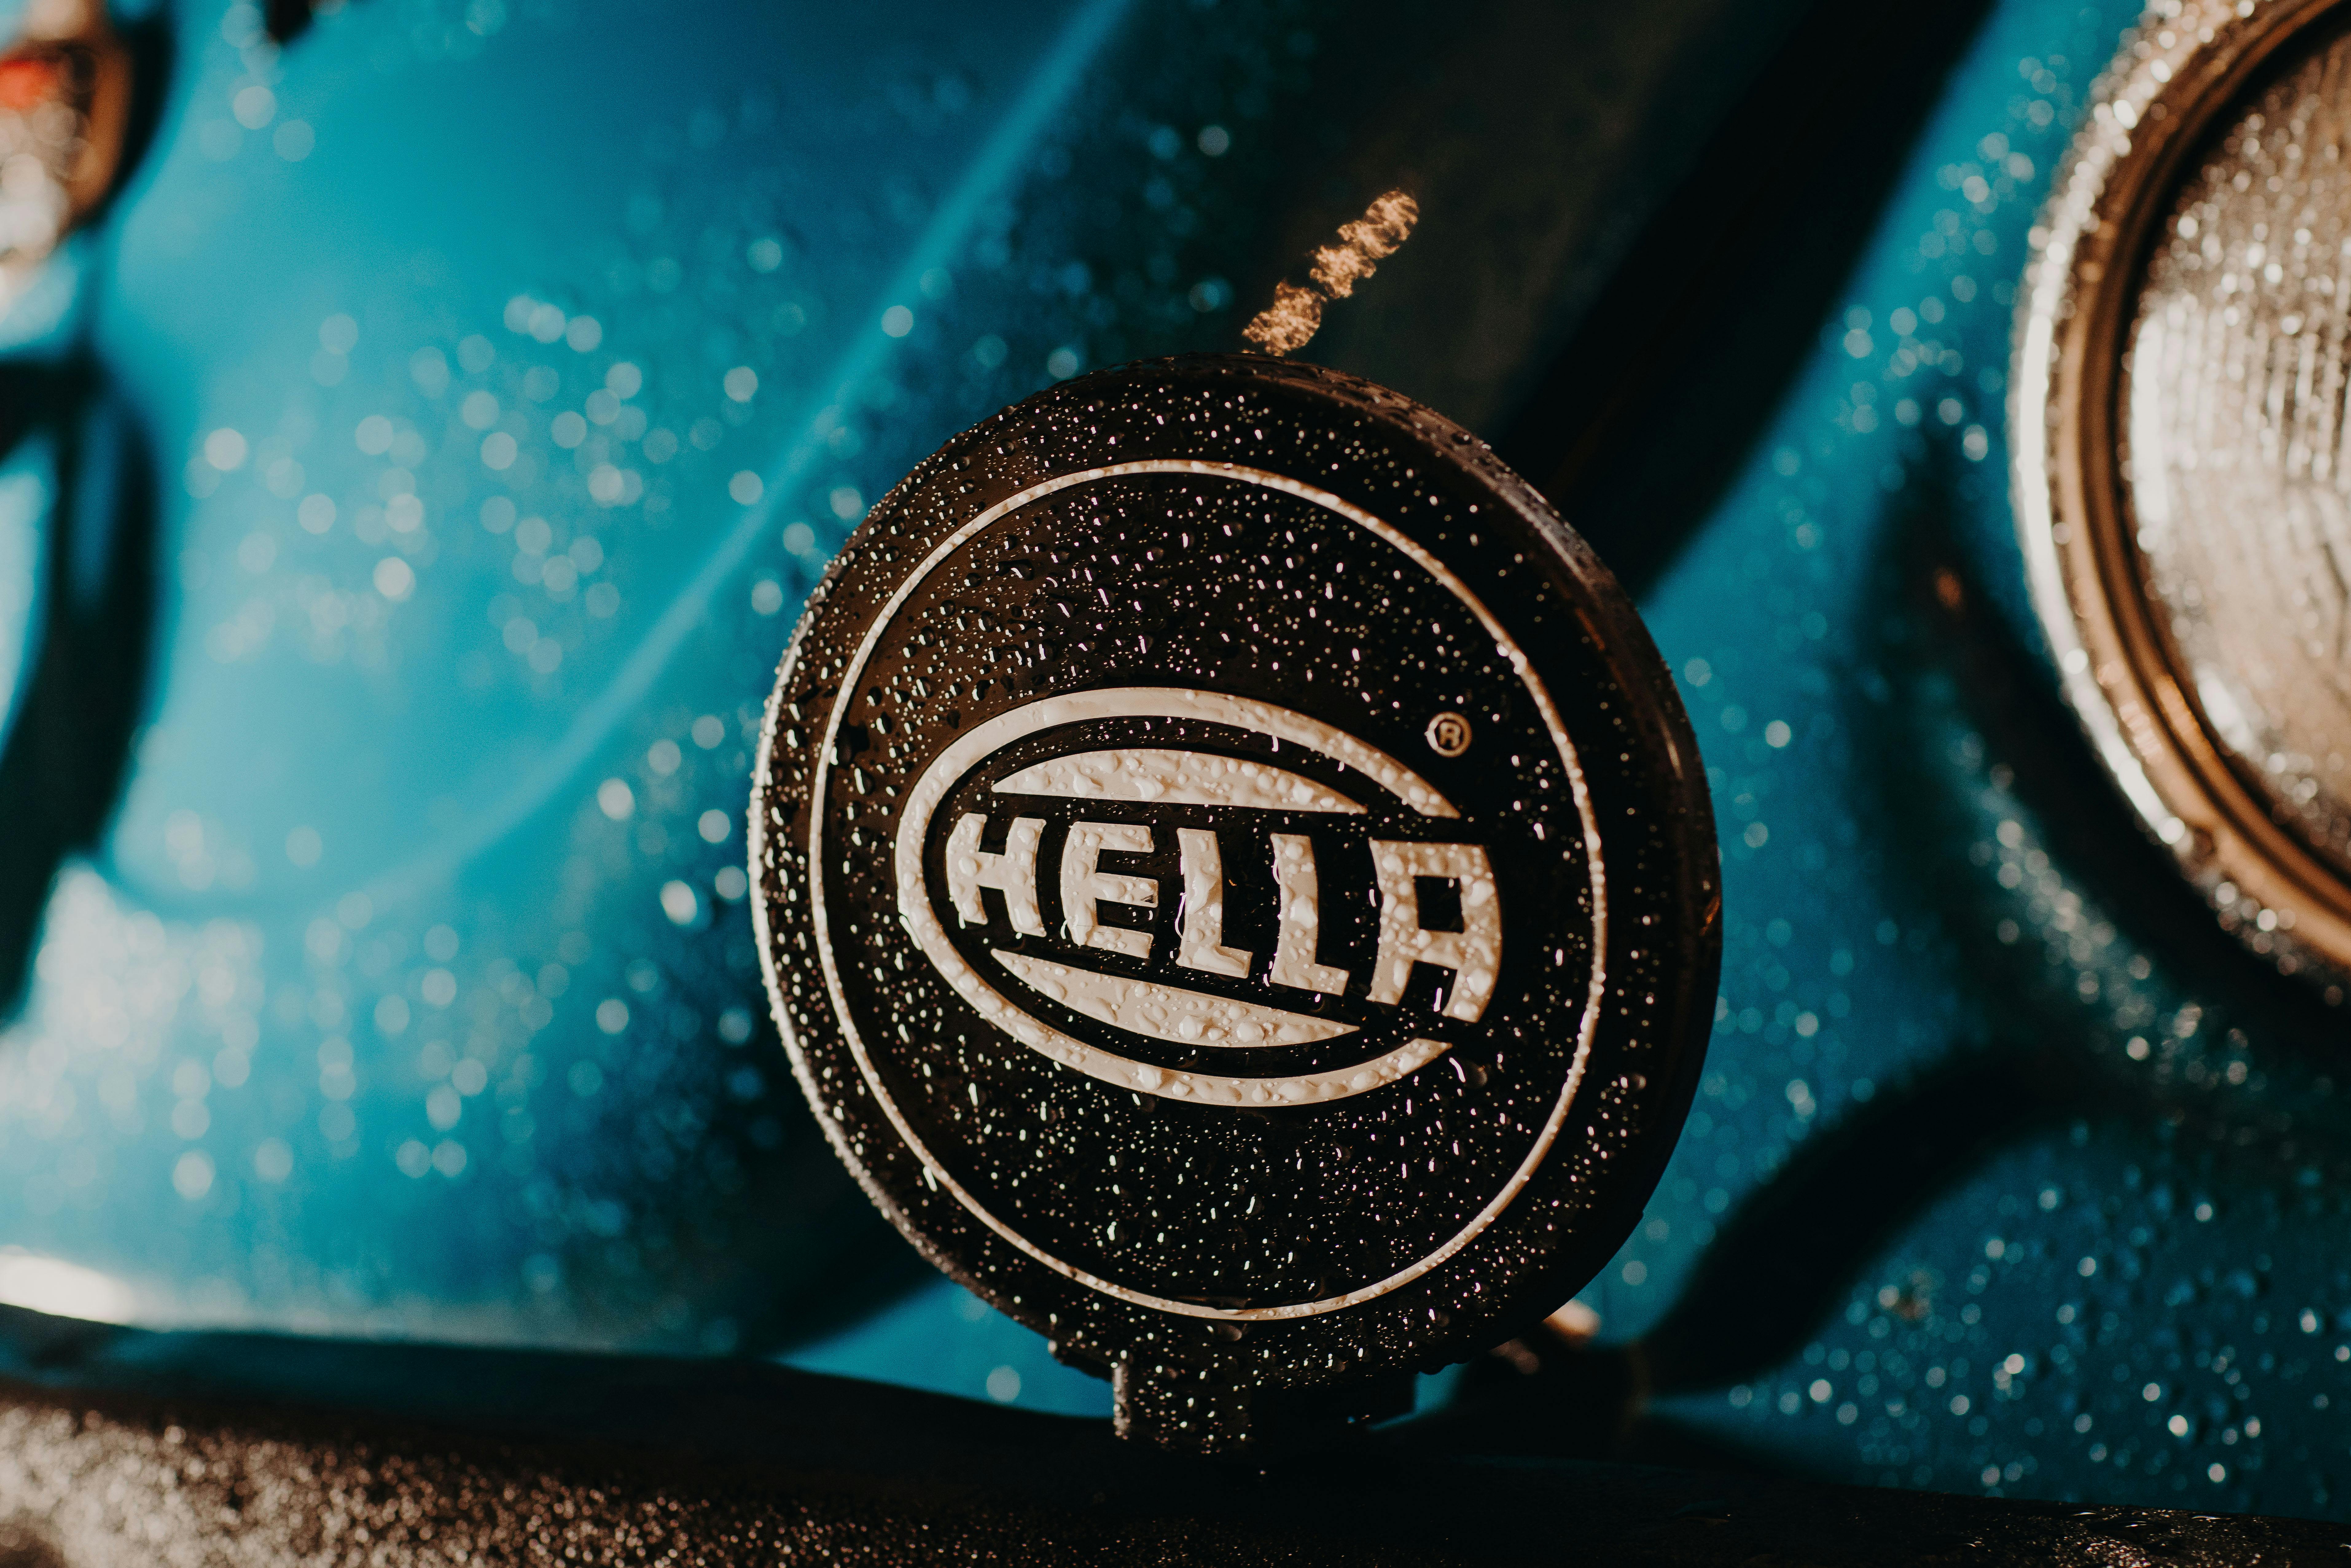 close up of wet emblem of hella company on a car